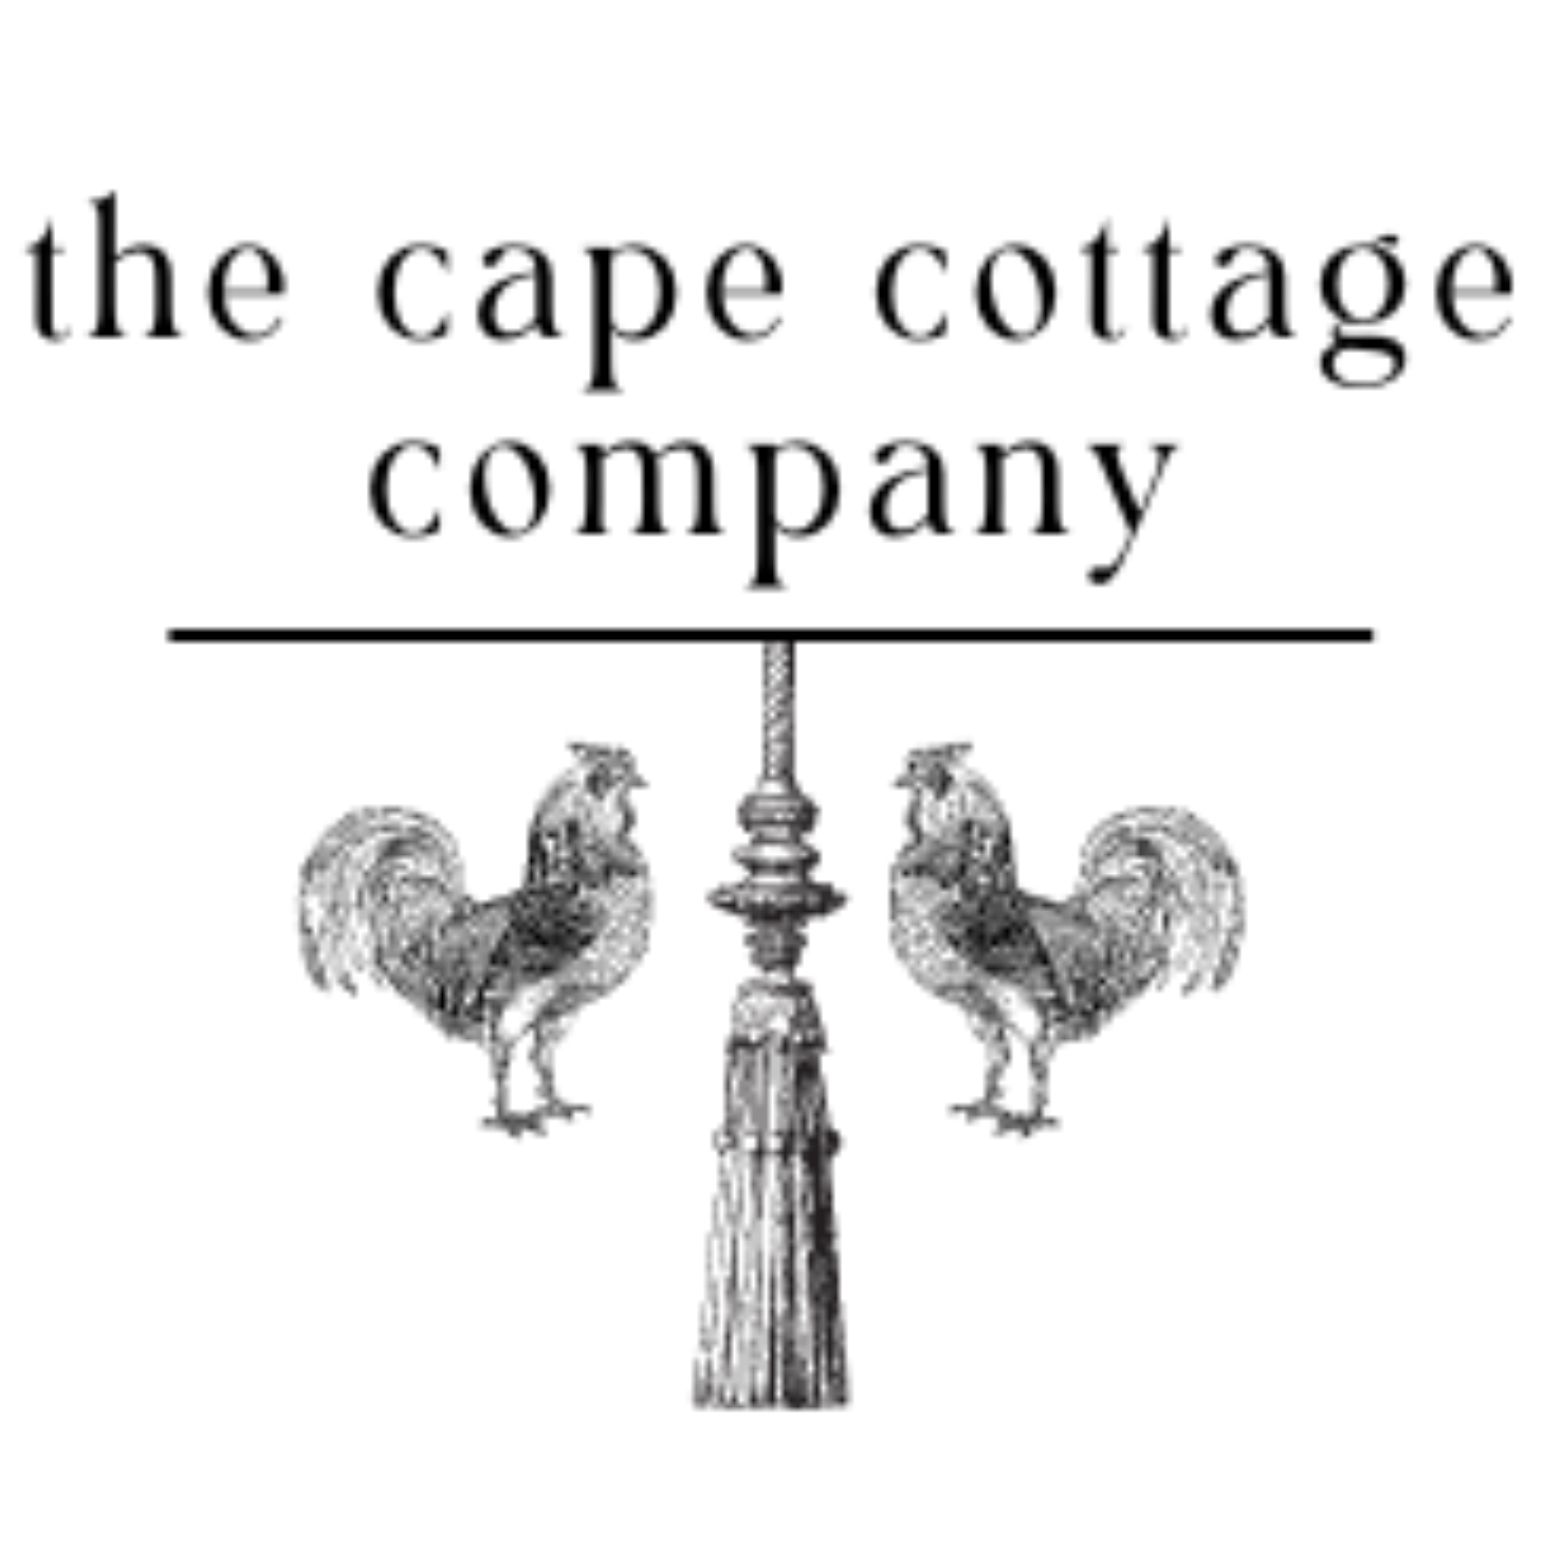 The Cape Cottage Company